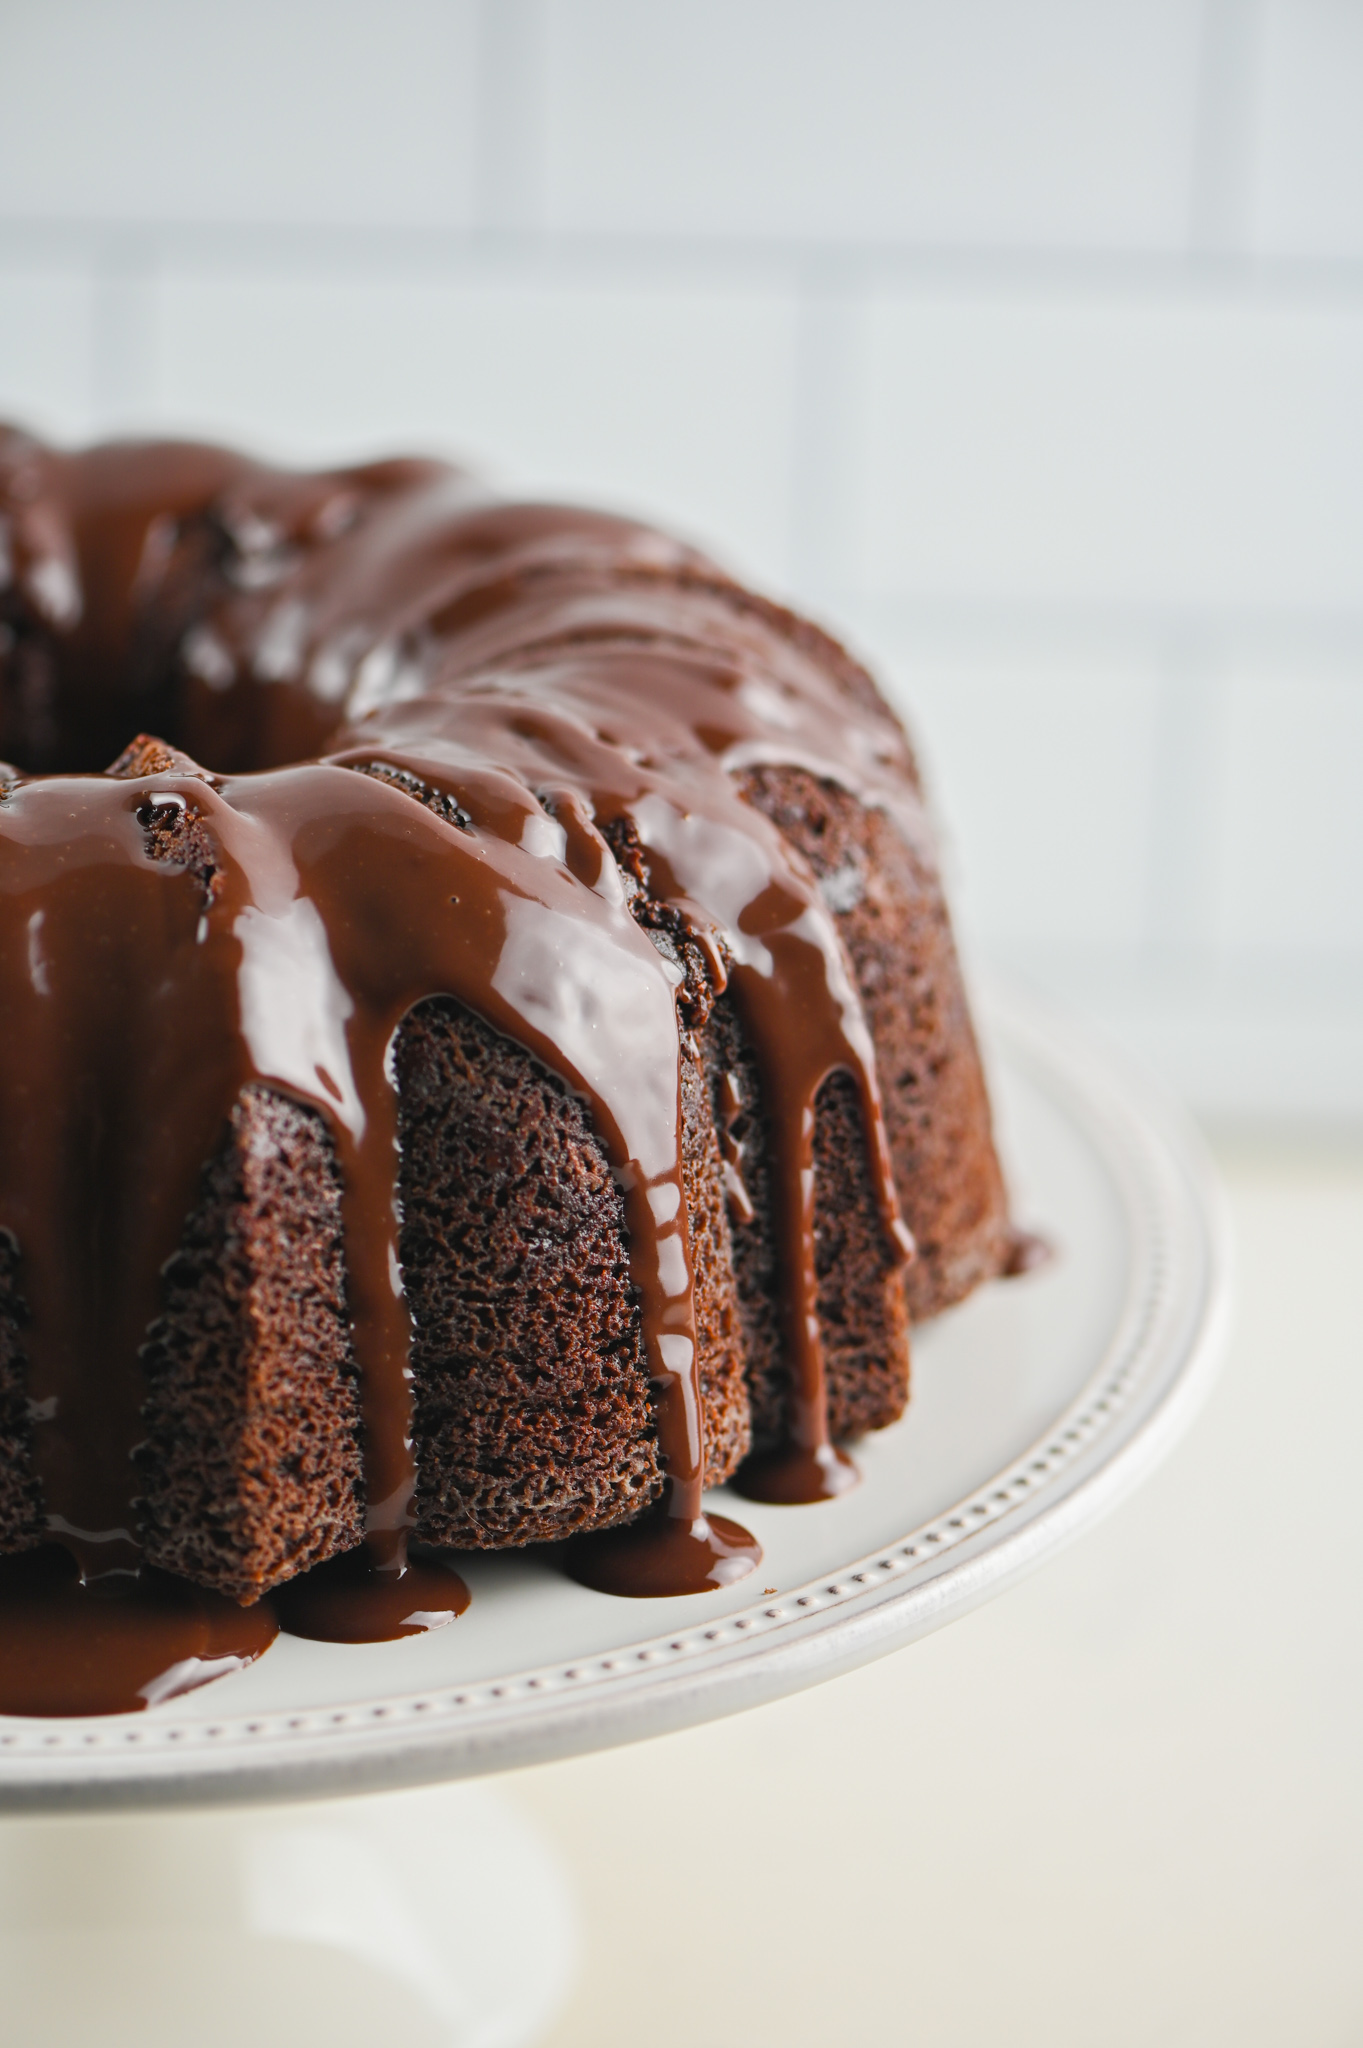 https://www.lifesambrosia.com/wp-content/uploads/Triple-Chocolate-Bundt-Cake-Recipe-6.jpg